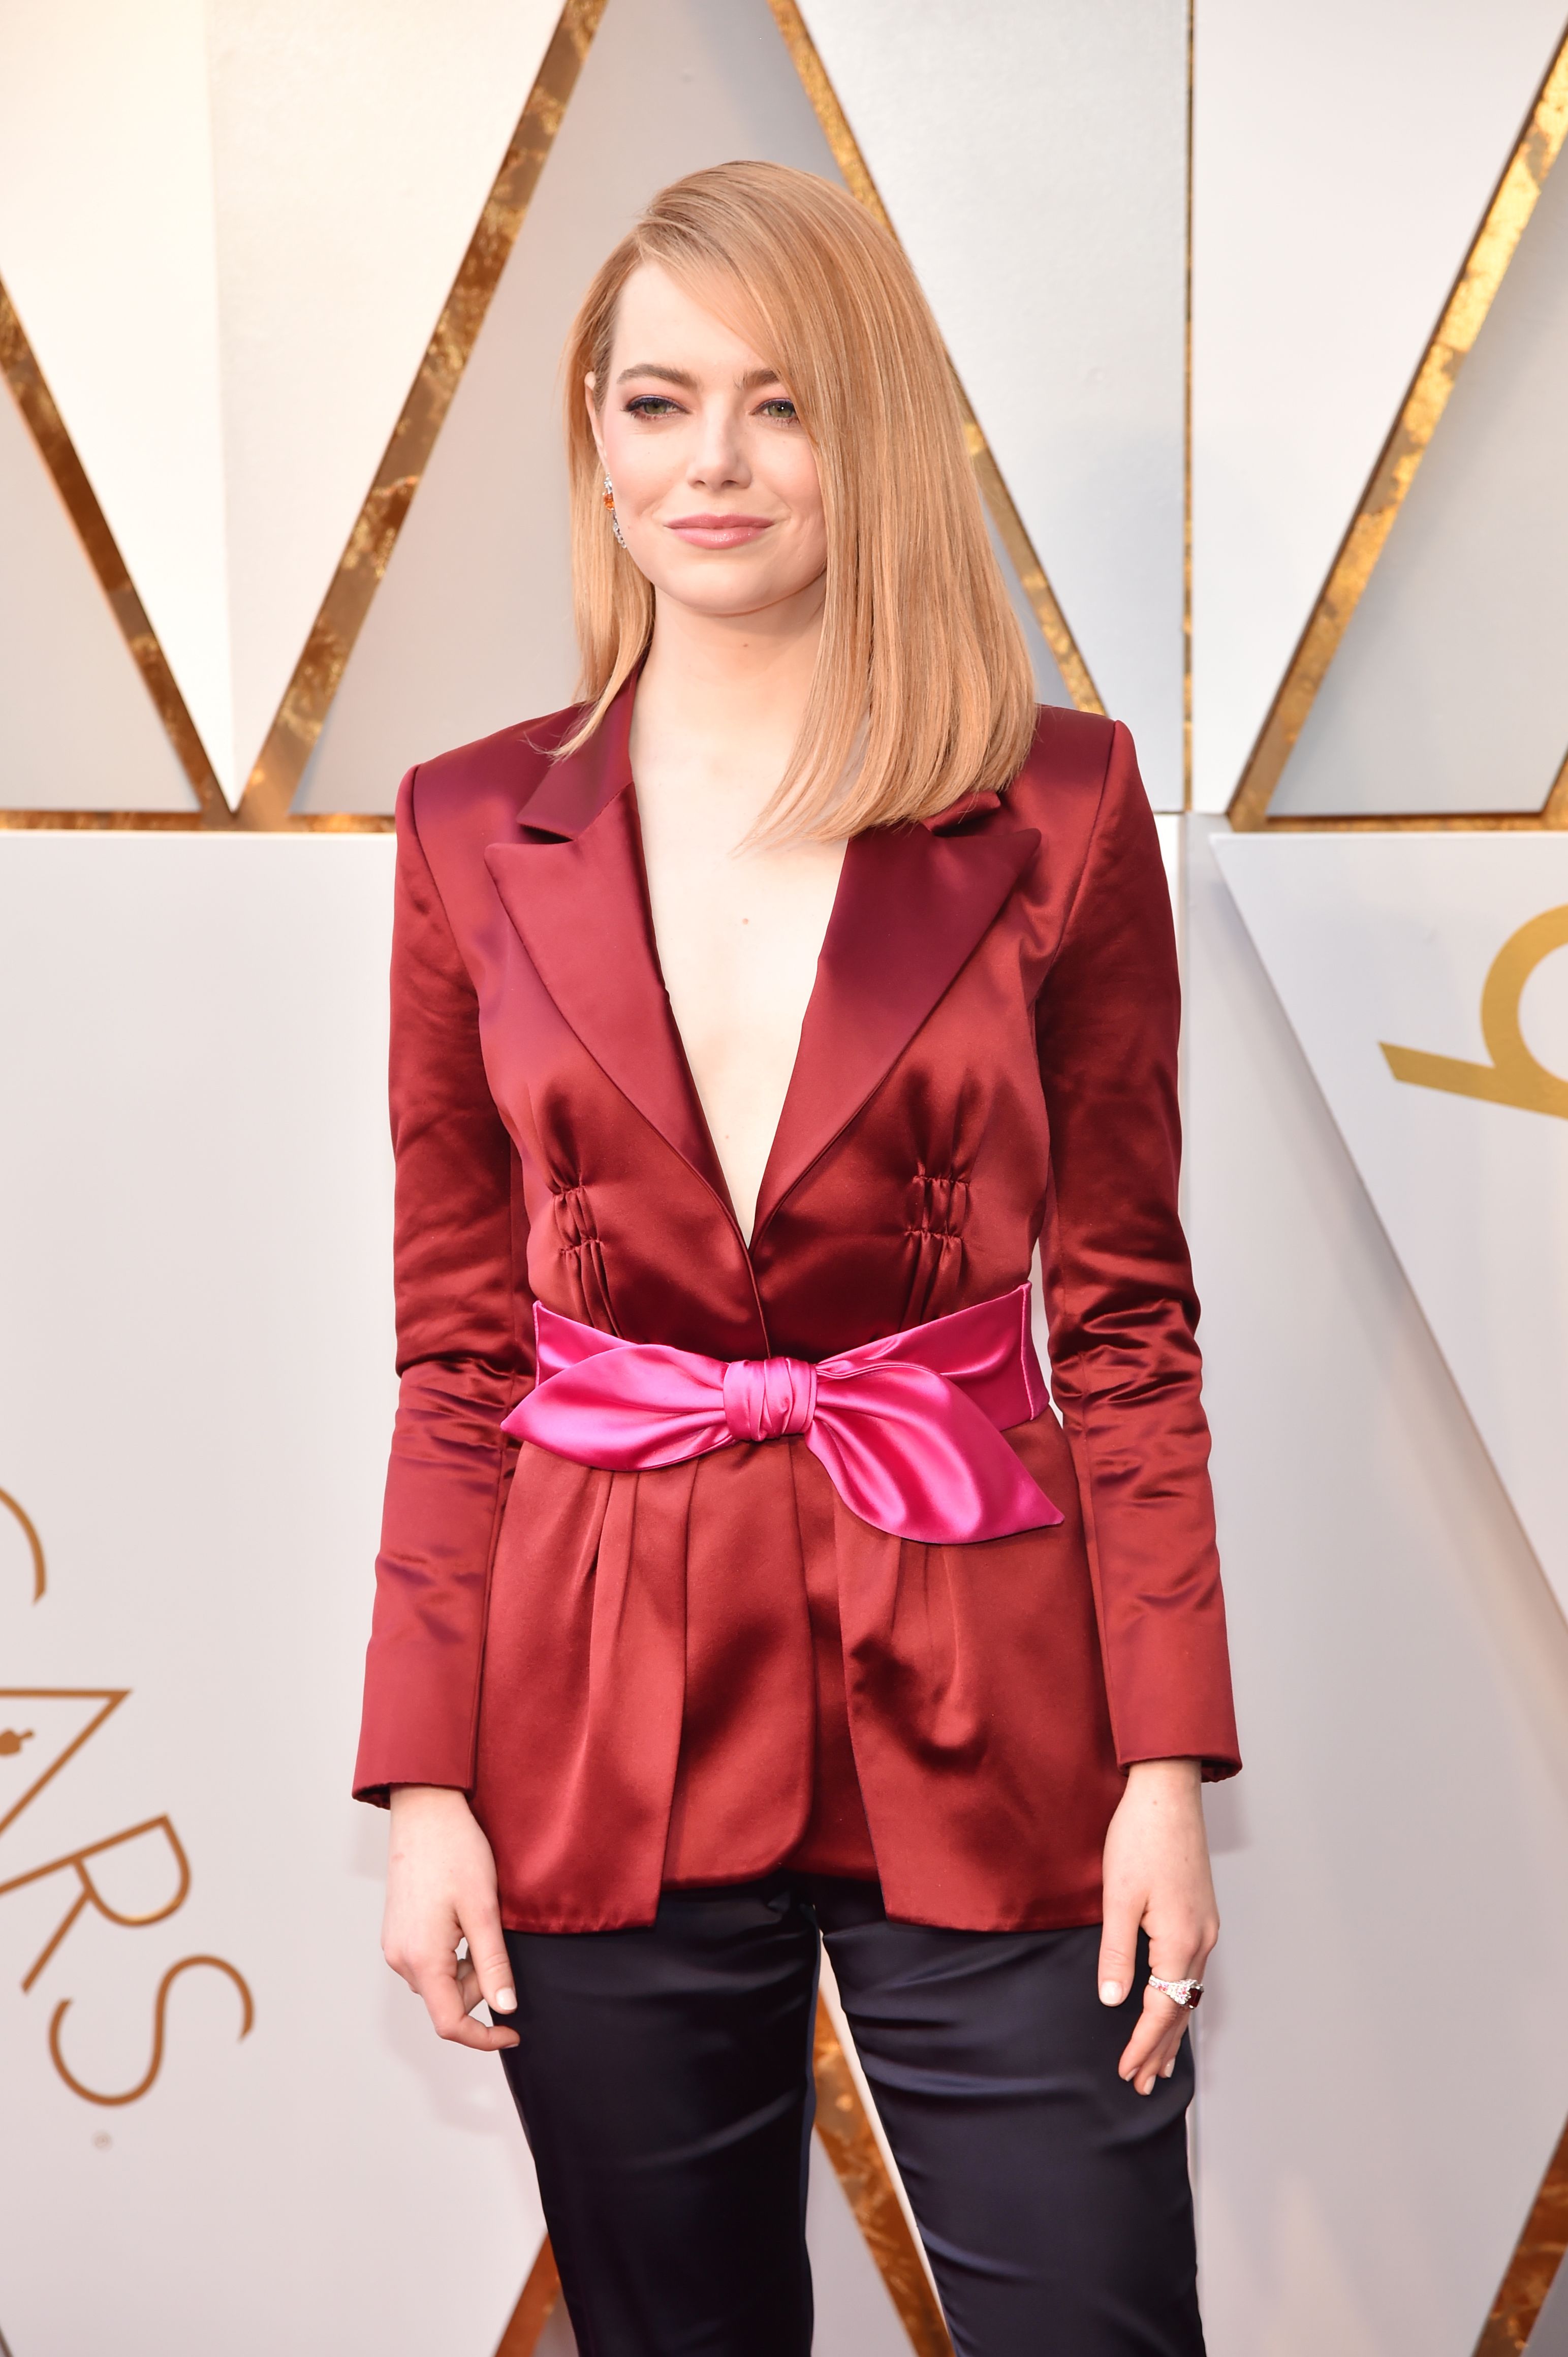 Emma Stone's Oscar dress took 11 people and 1,700 to create